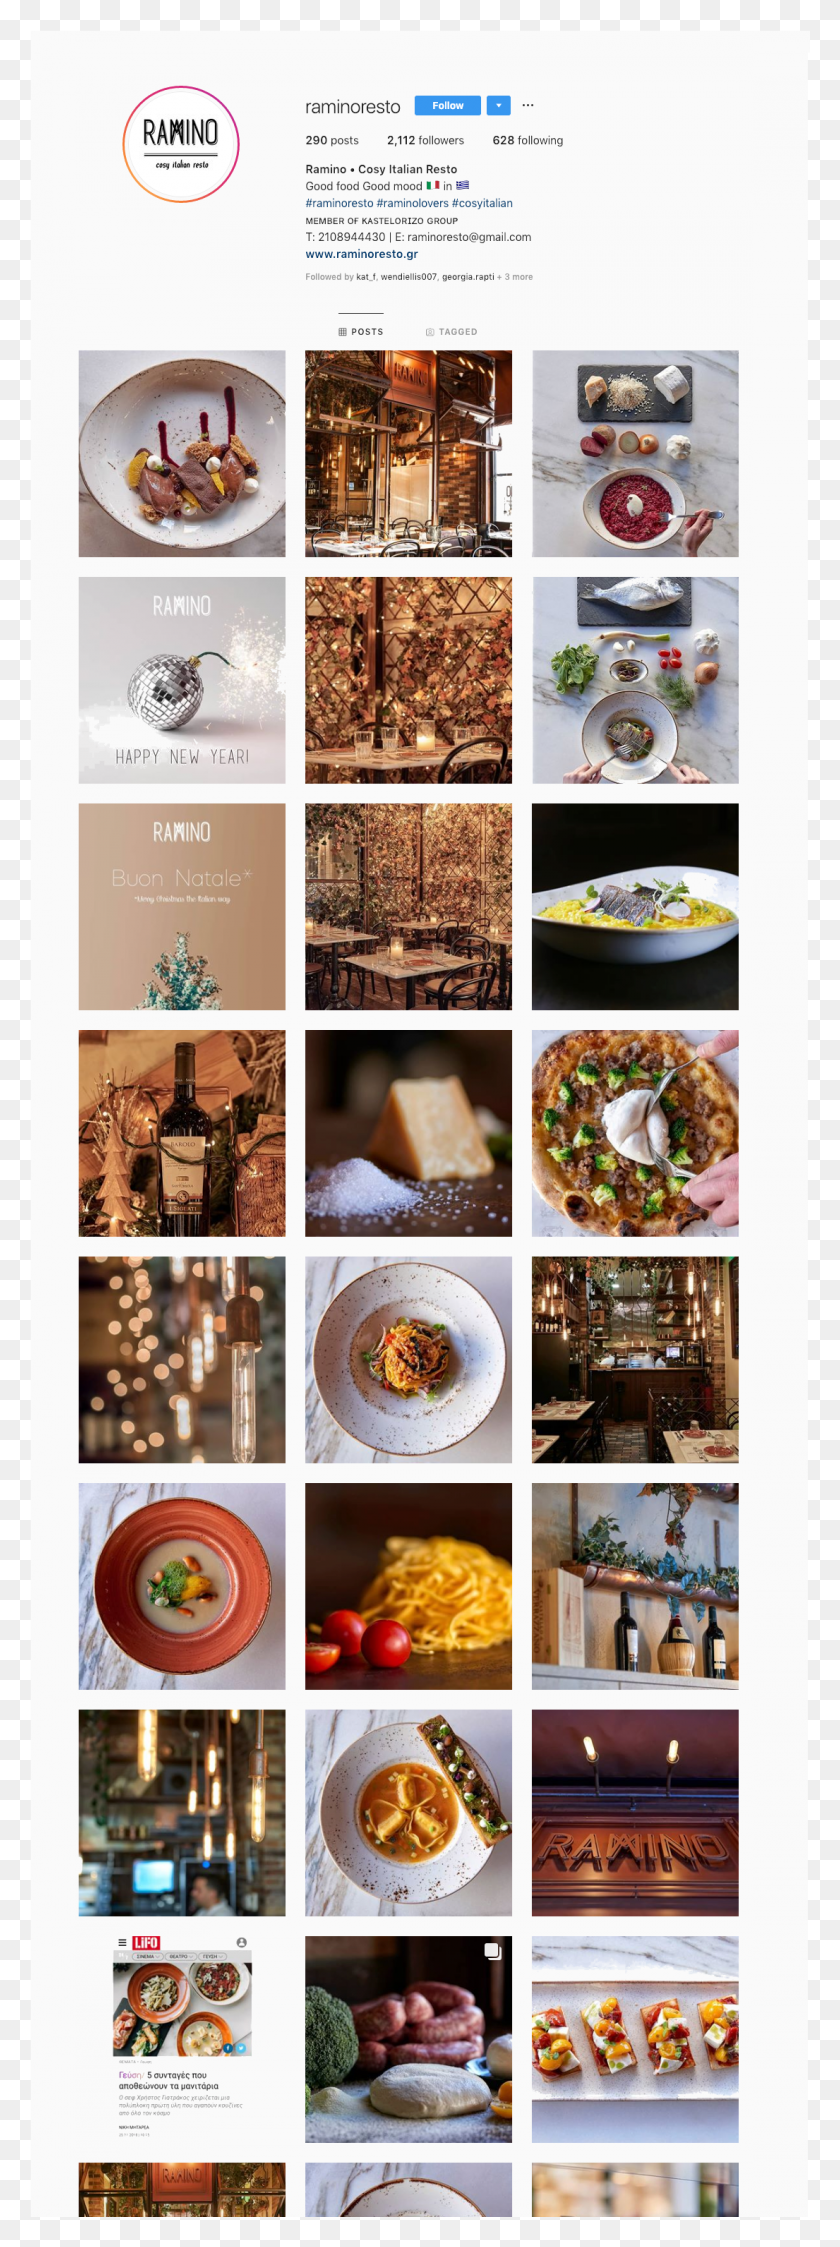 1105x3099 Ramino Glyfada Instagram Screen Capture Waffle Belga Hd Png Descargar